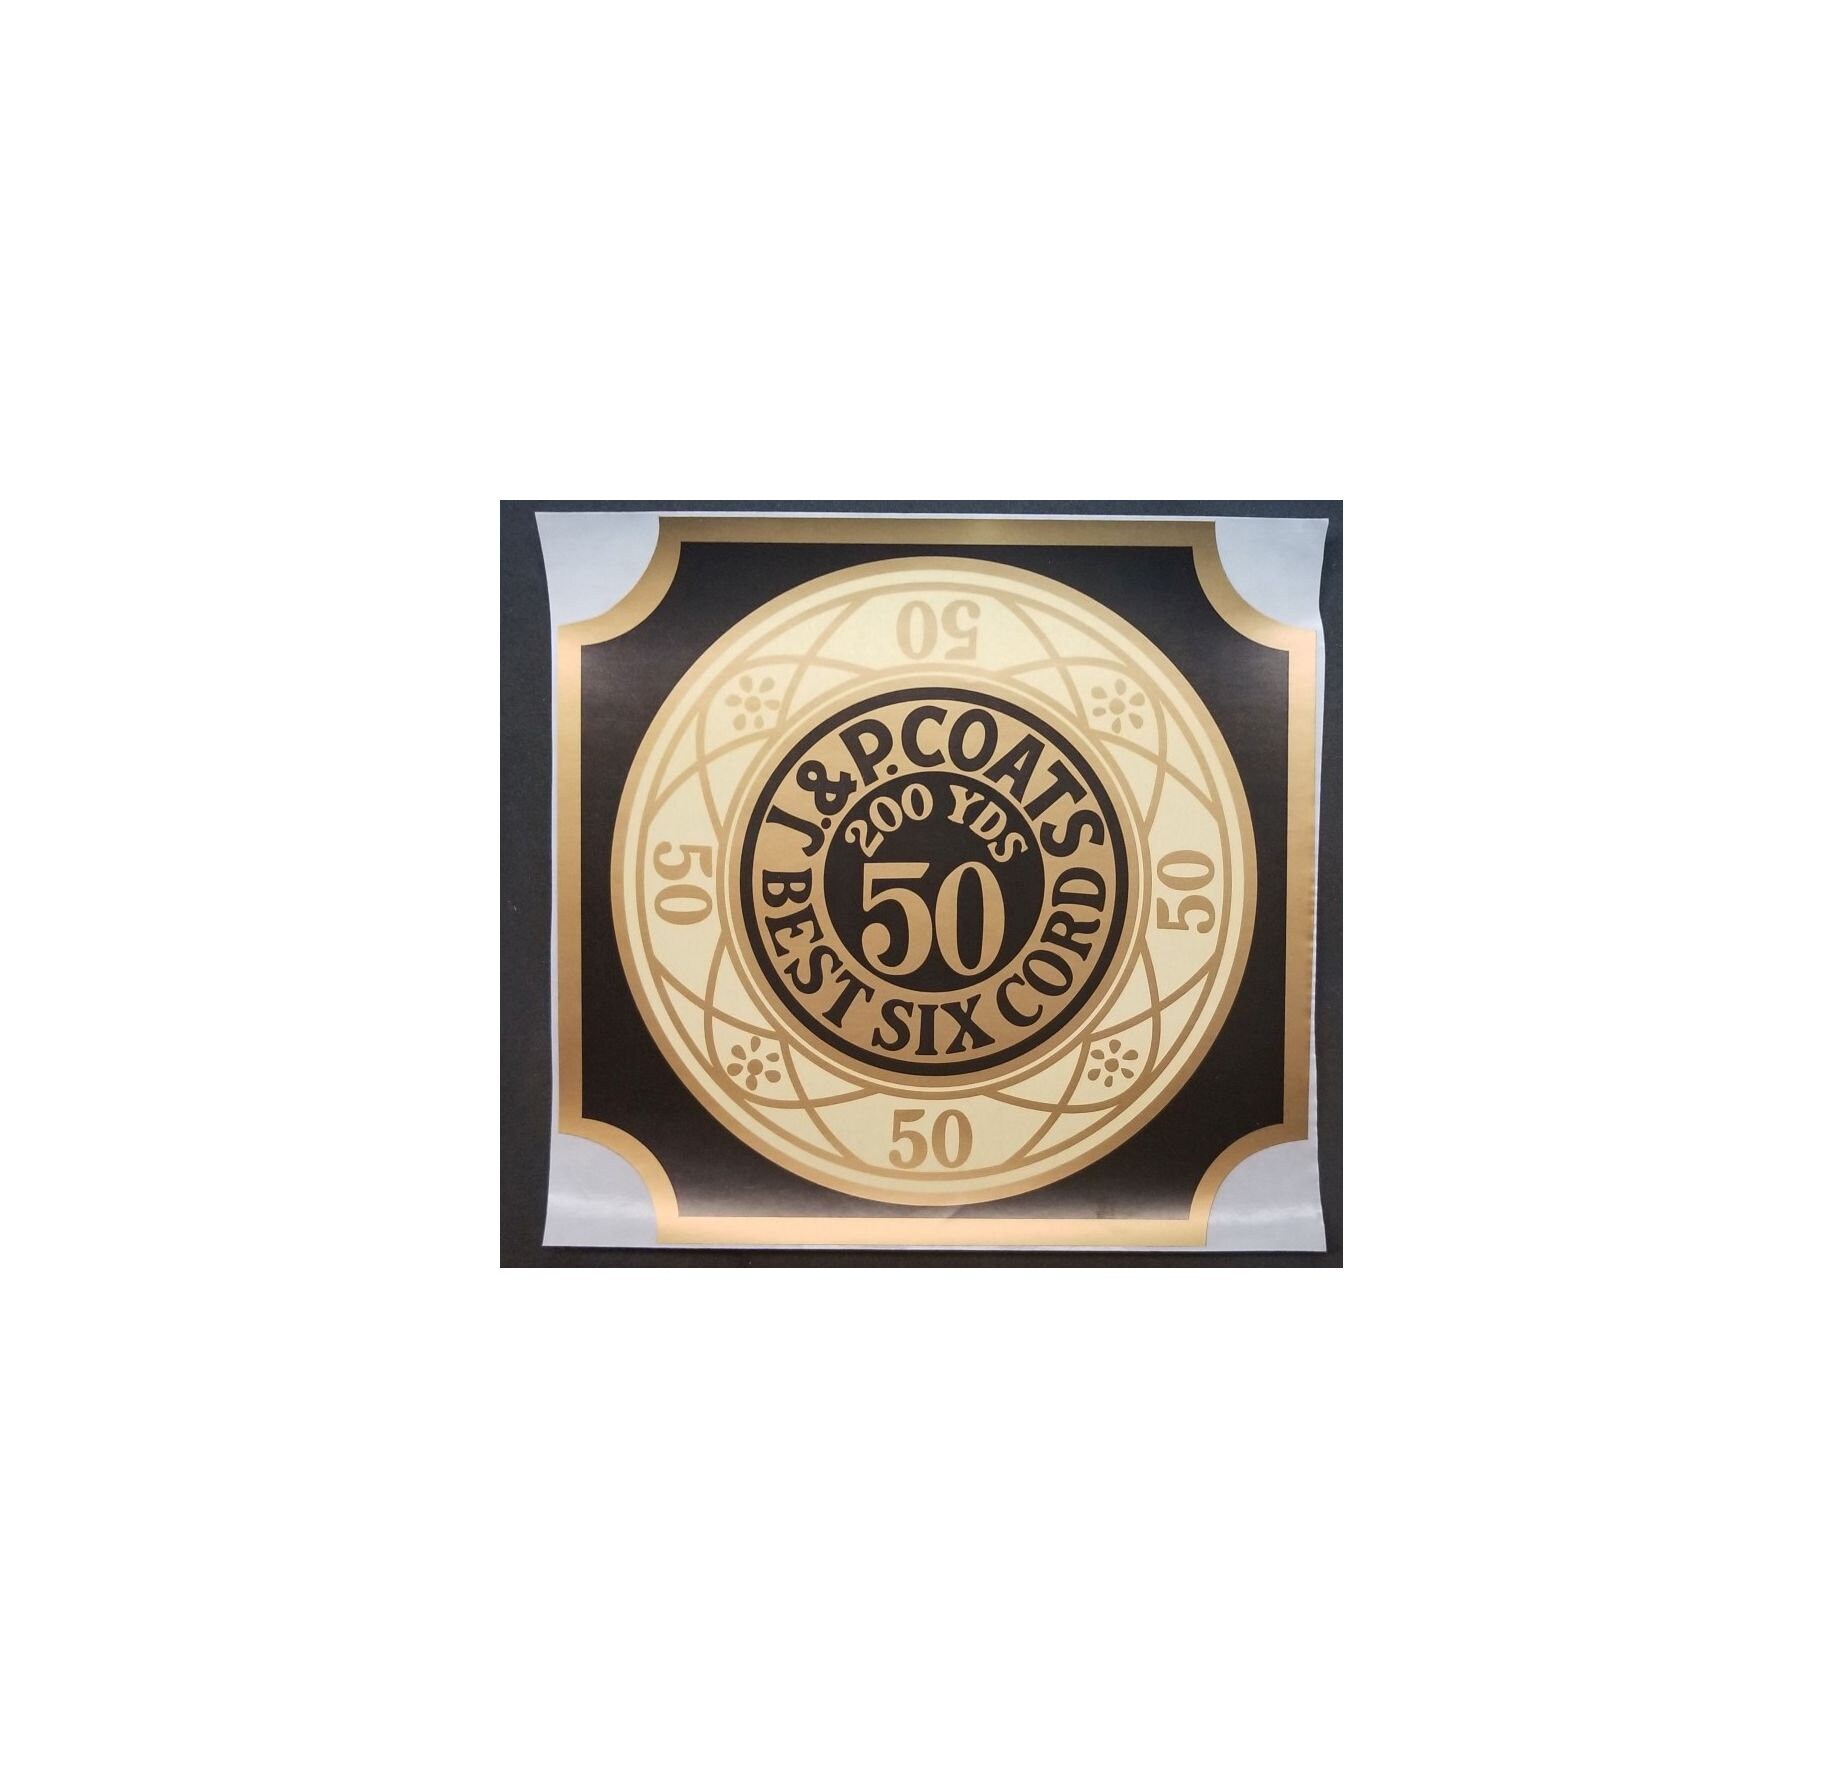 J & P COATS SPOOL CABINET DECALS 8 PIECE SET Black on Gold 9 1/2 X 1 11/16 